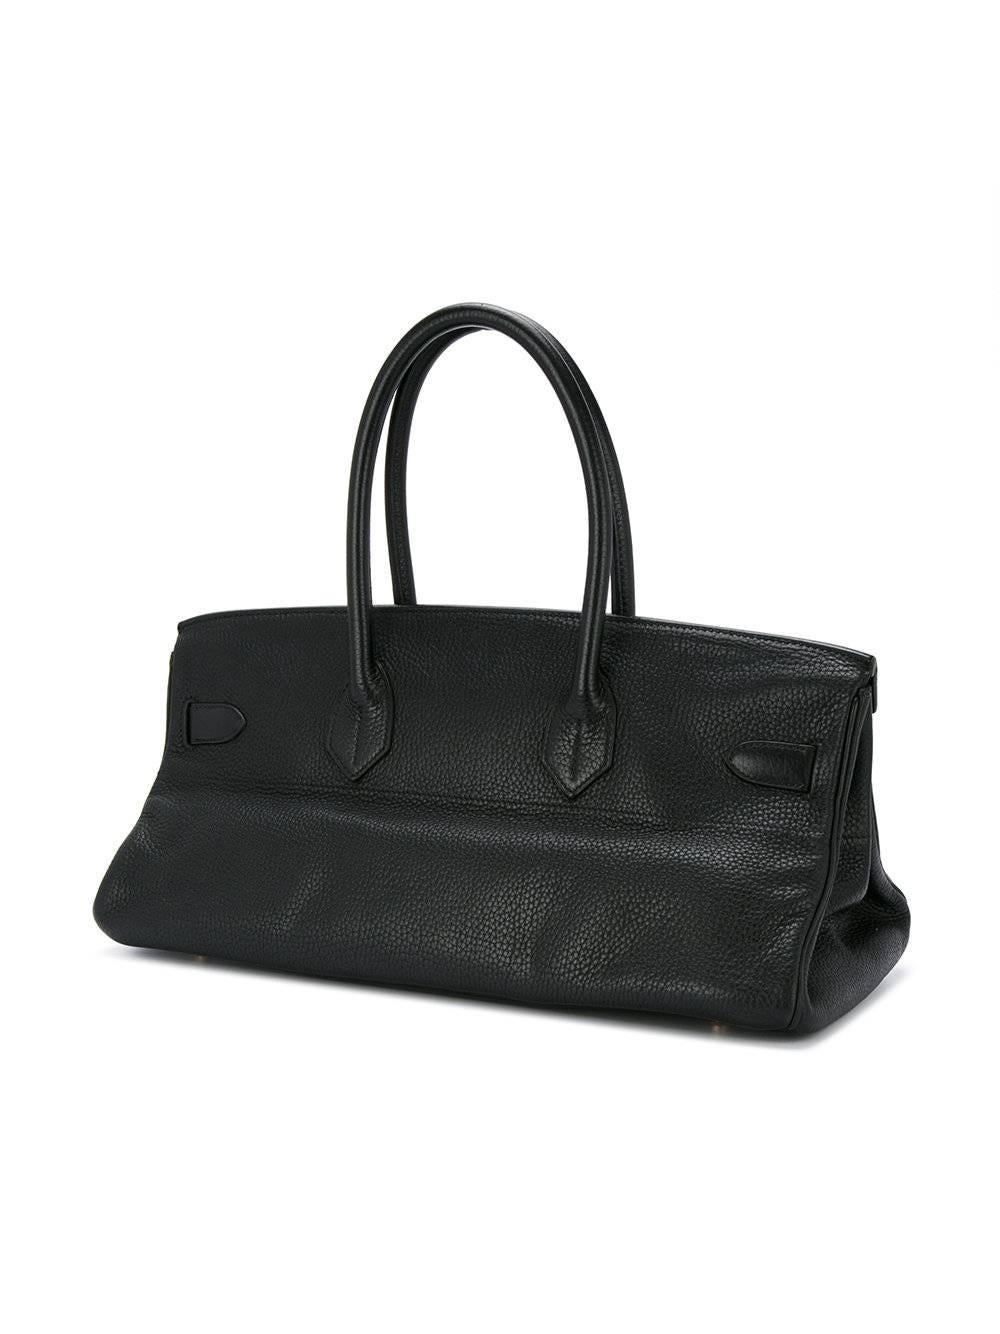 Hermes Birkin Black Leather Gold Hardware Top Handle Satchel Bag and Accessories 1